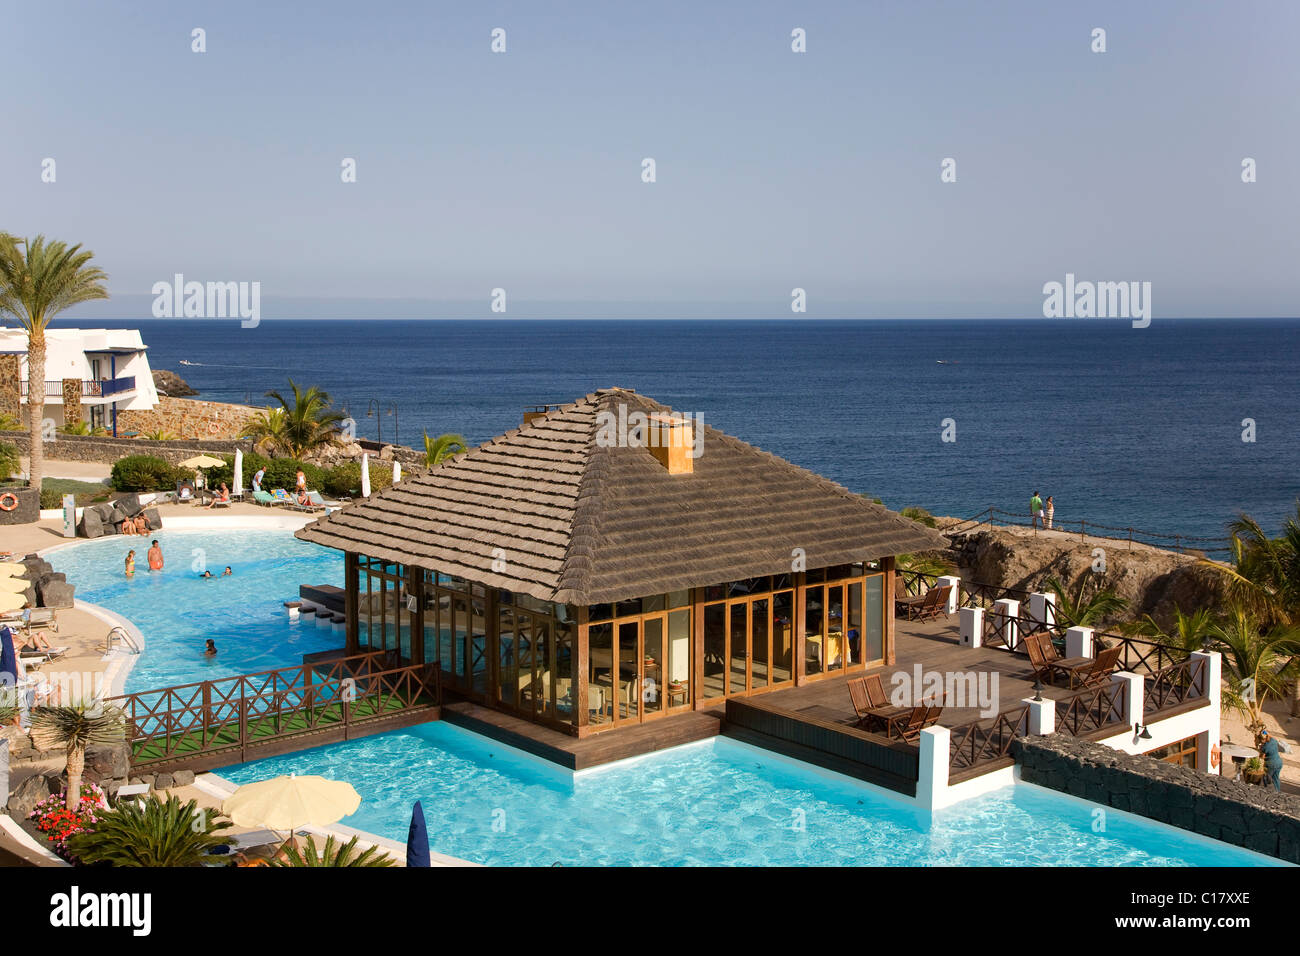 Hesperia Lanzarote Hotel, swimming pool with ocean views, Costa Calero, Lanzarote, Canary Islands, Spain, Europe Stock Photo